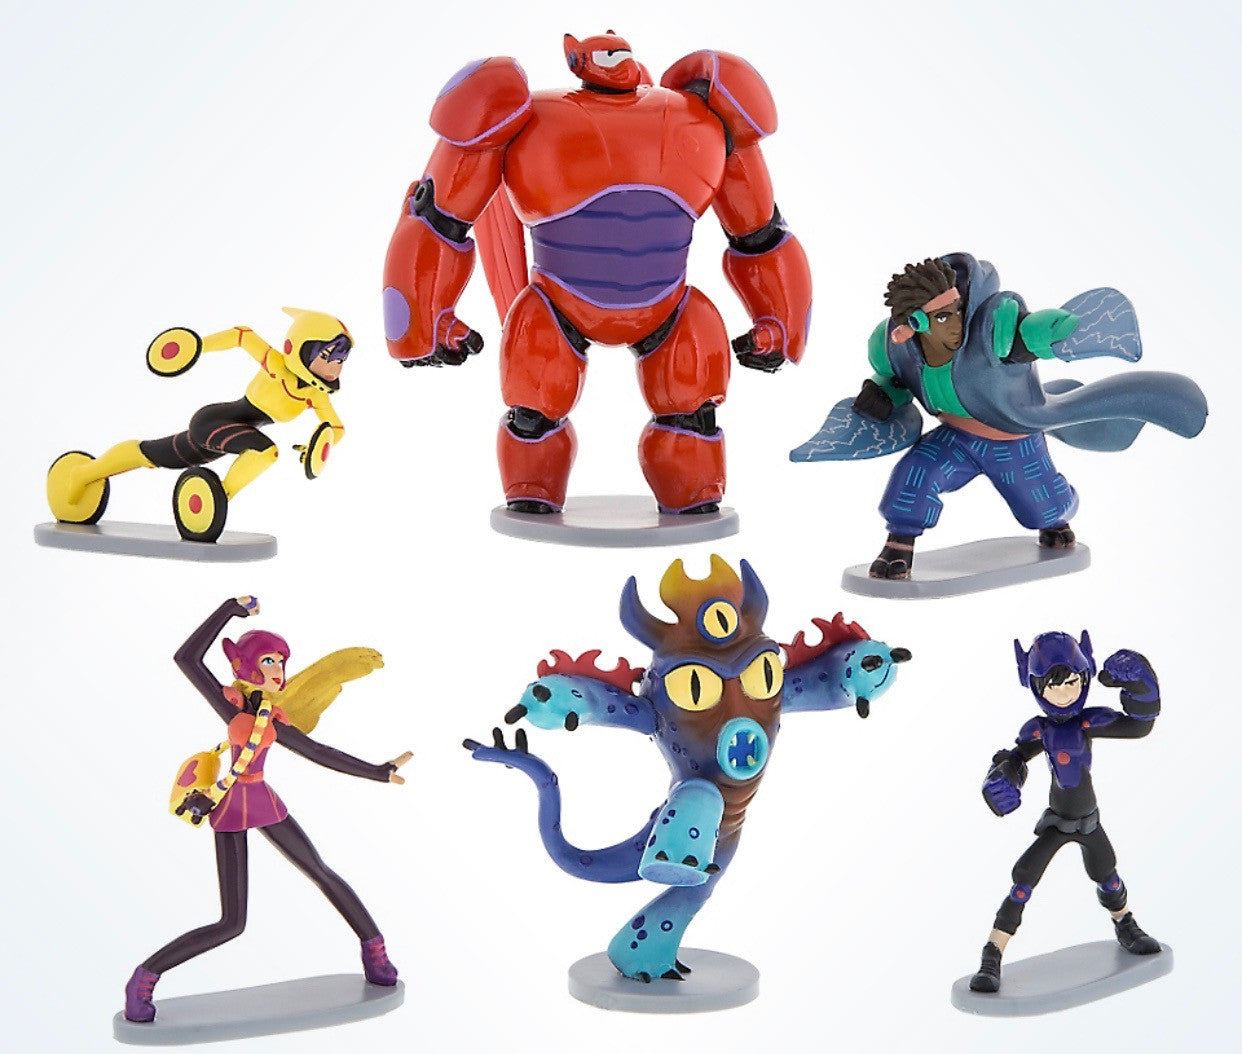 Disney Store Big Hero 6 Play Set Figurine Cake Topper 6pcs New with Box